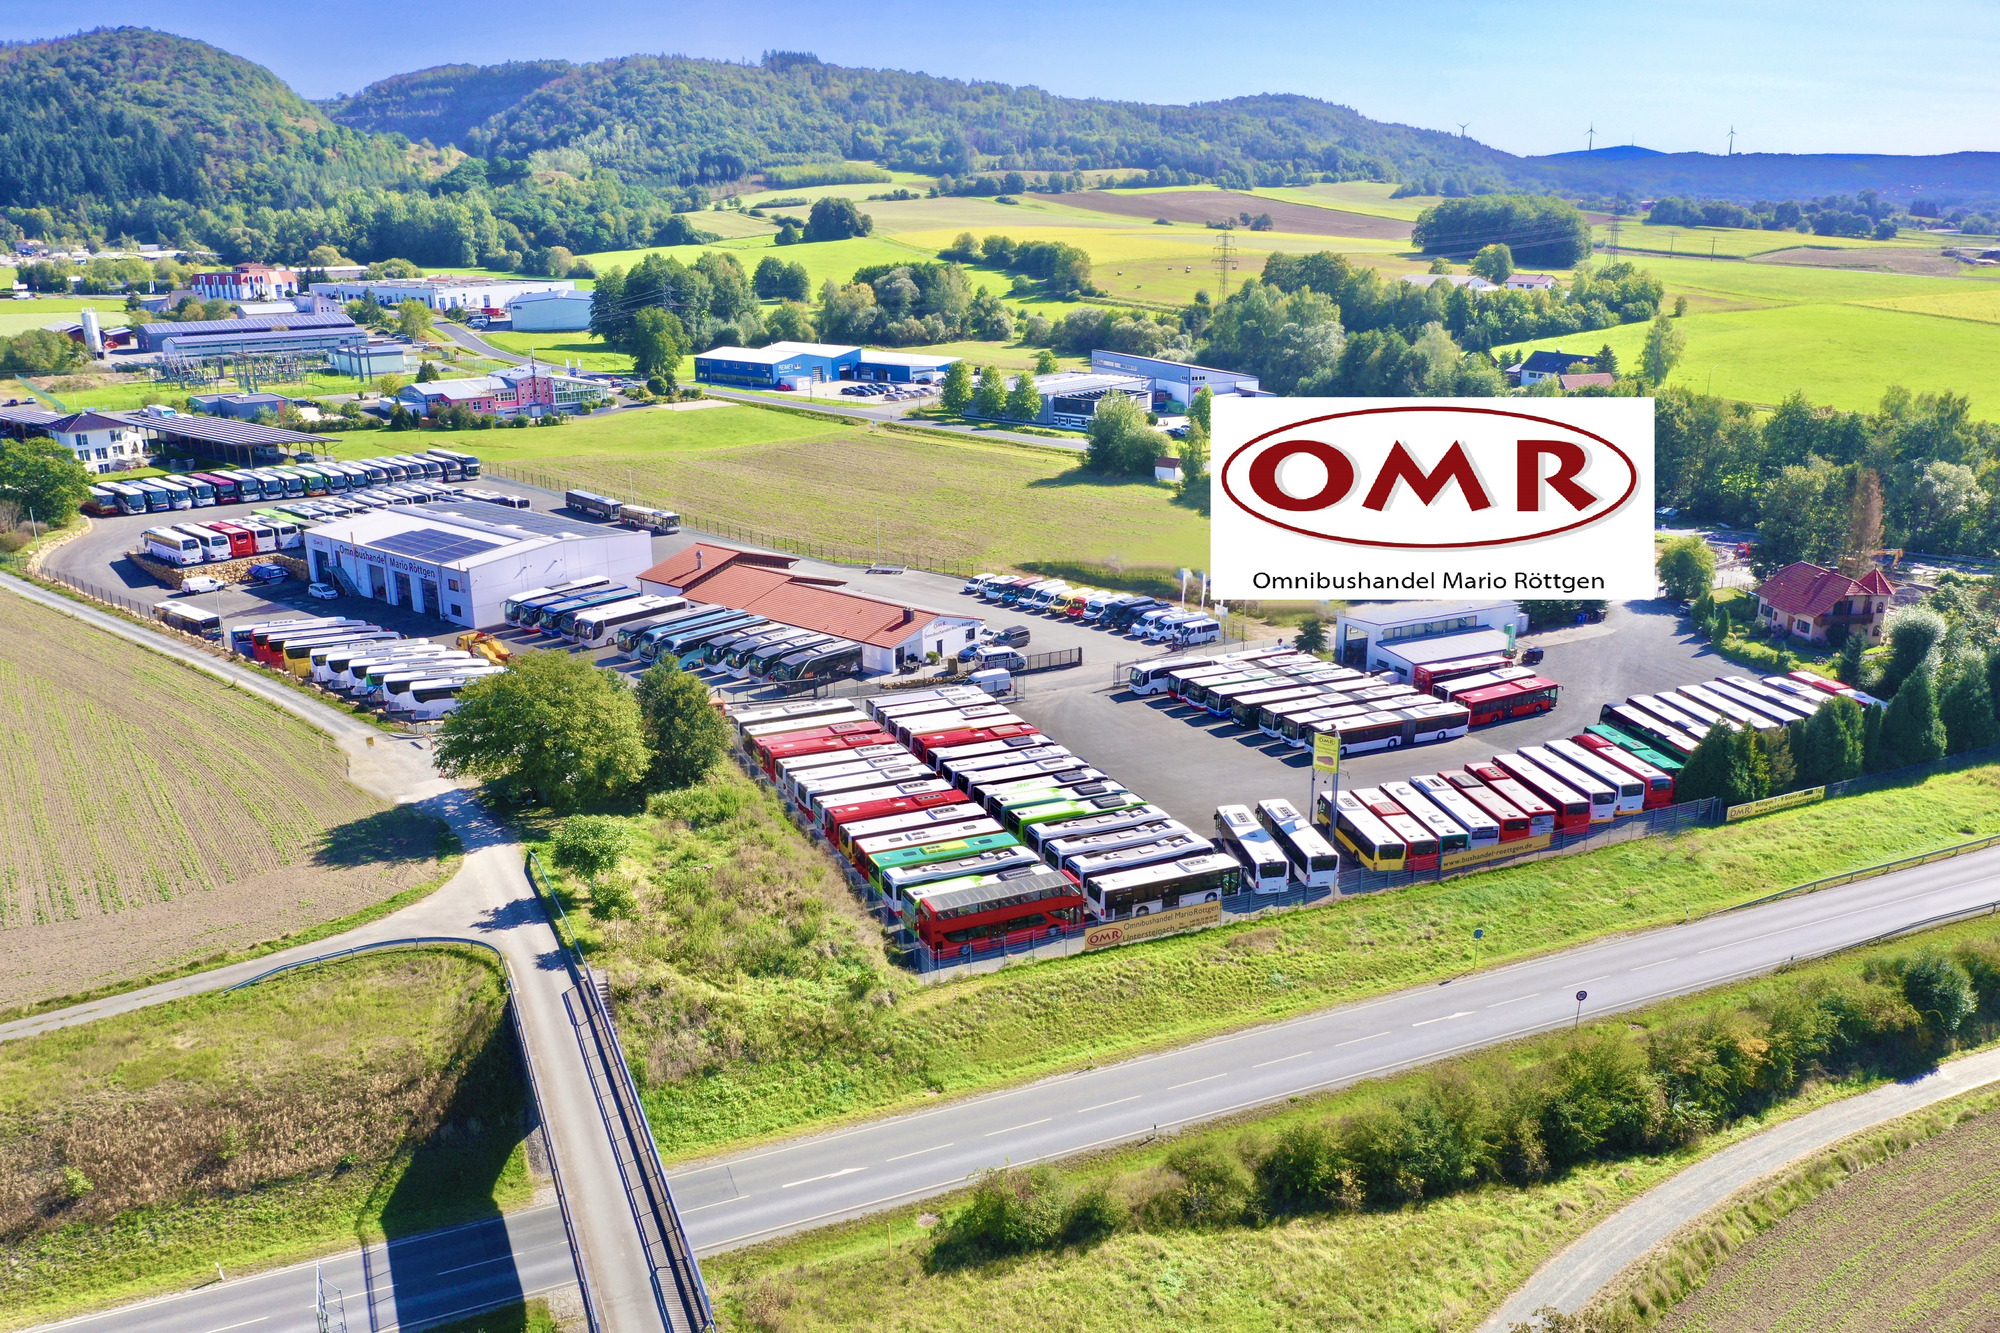 OMR Omnibushandel Mario Röttgen GmbH - eladó járművek undefined: 1 kép.